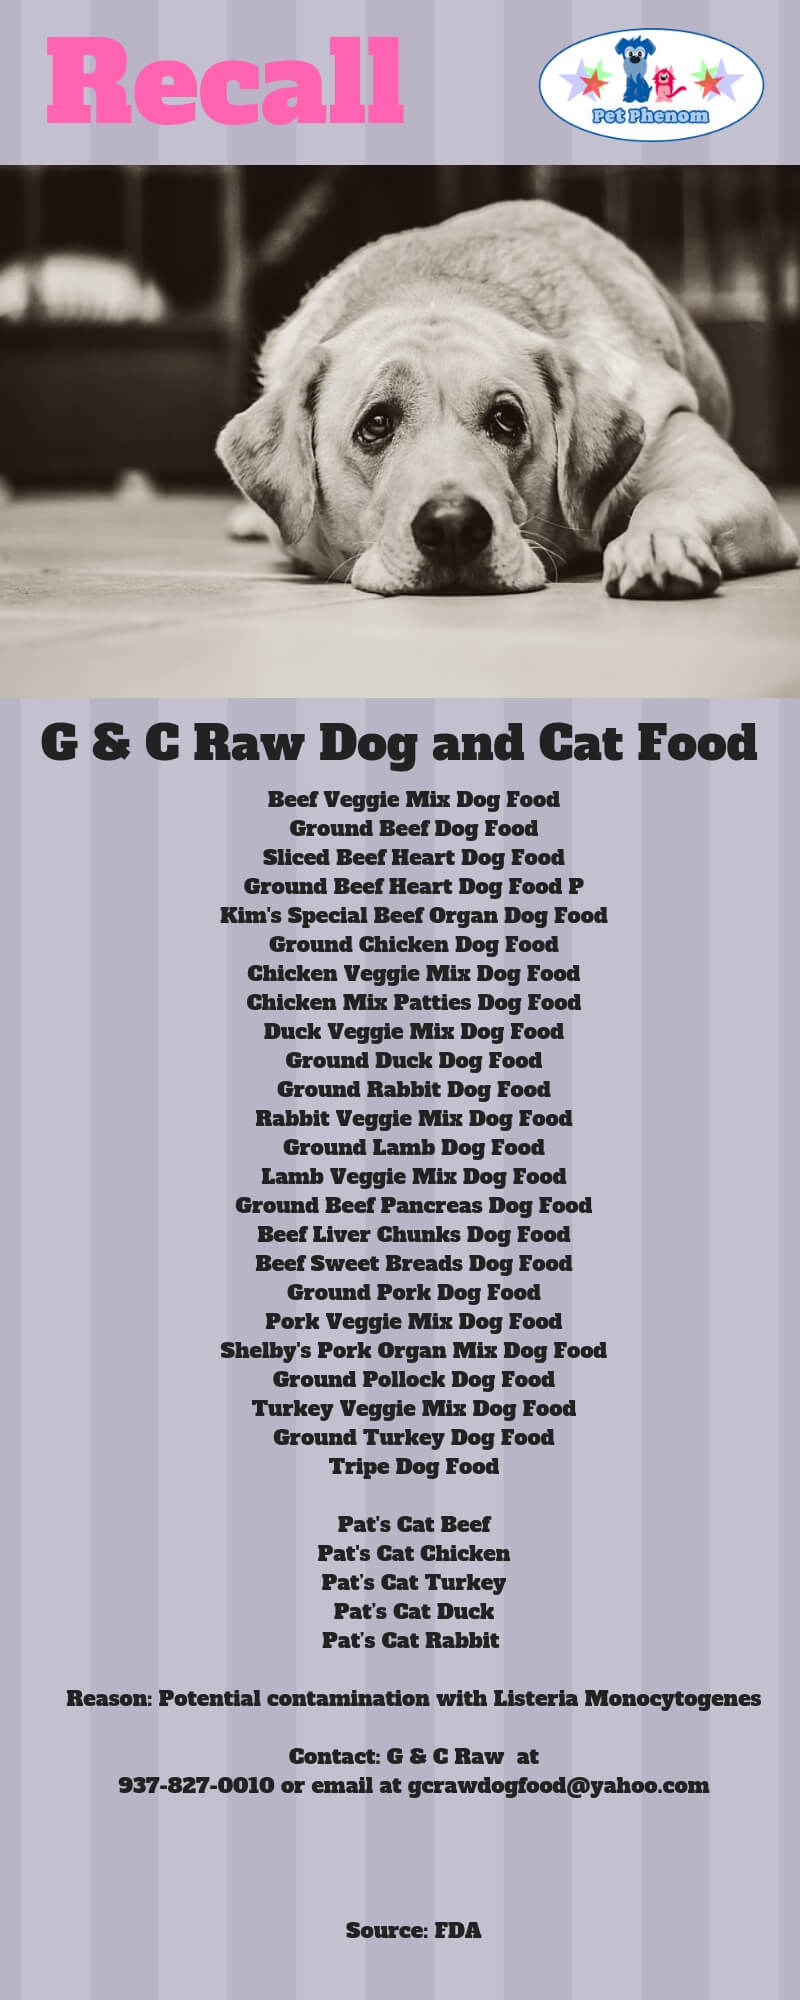 G & C Dog and Cat Food Recall